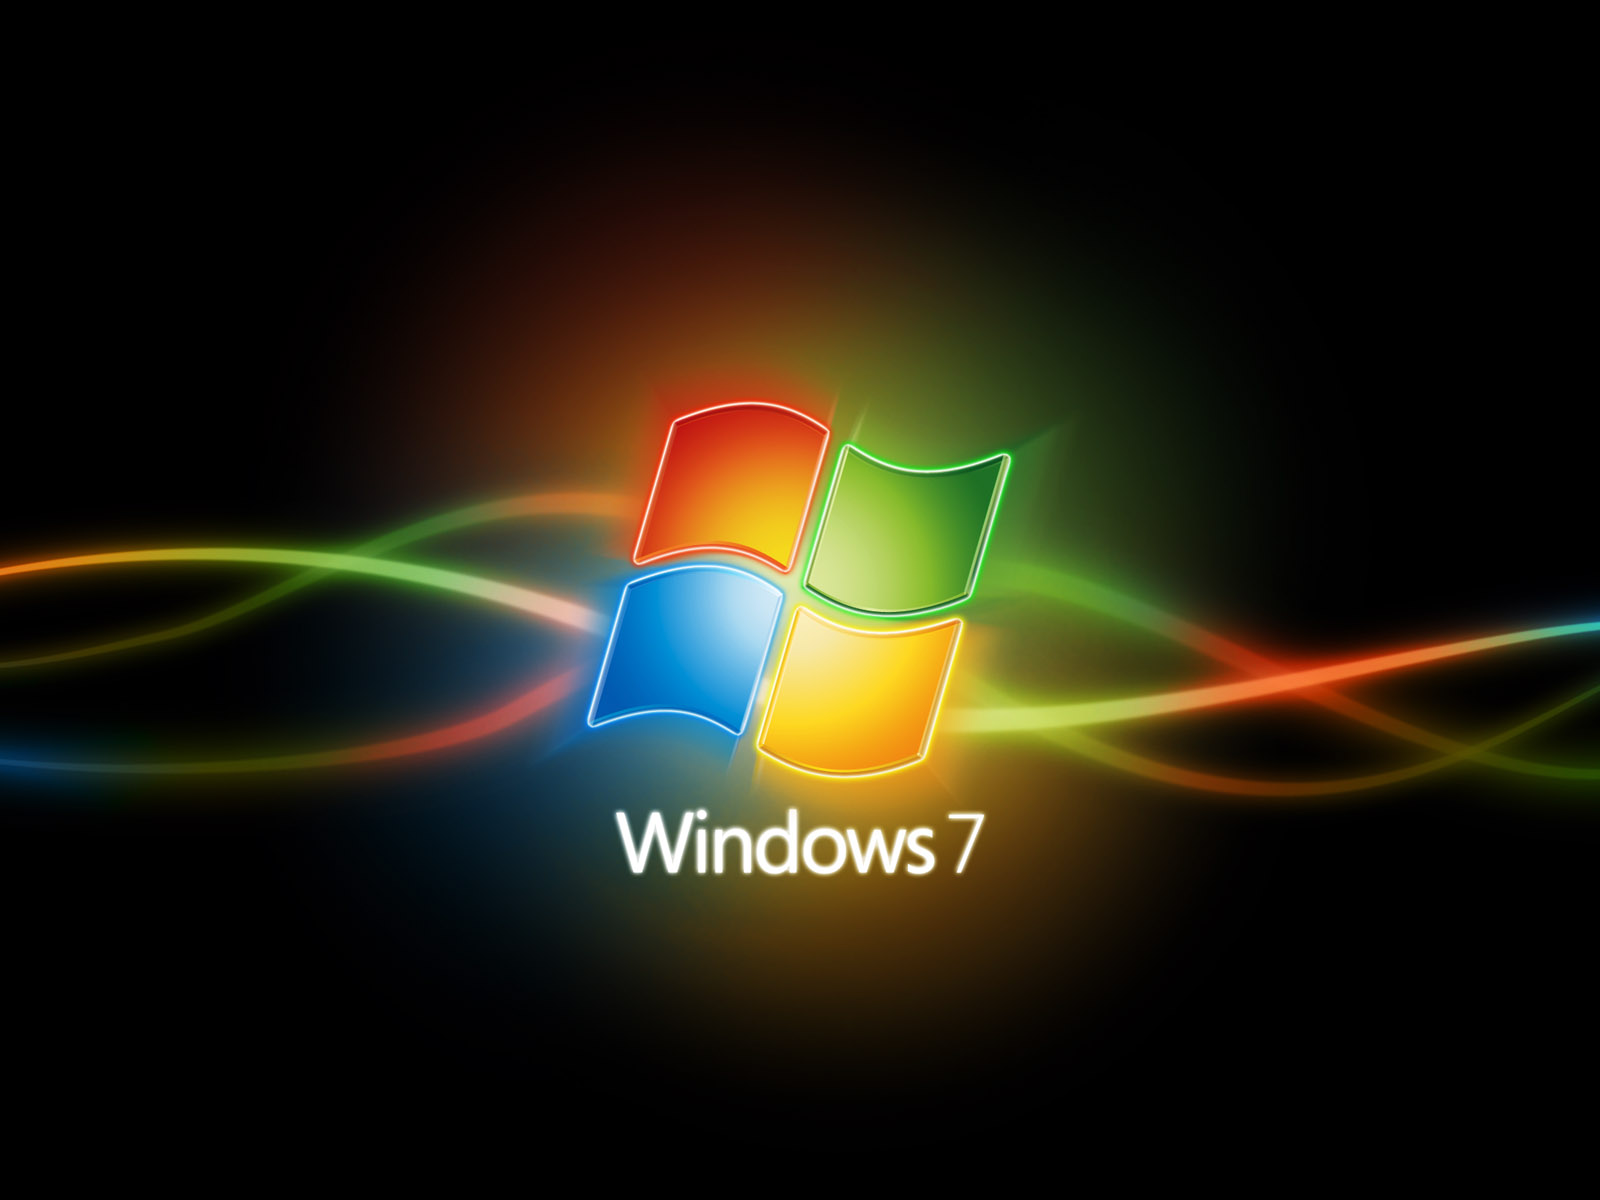 Previous, Computers - Windows 7 - ОS Windows se7en wallpaper